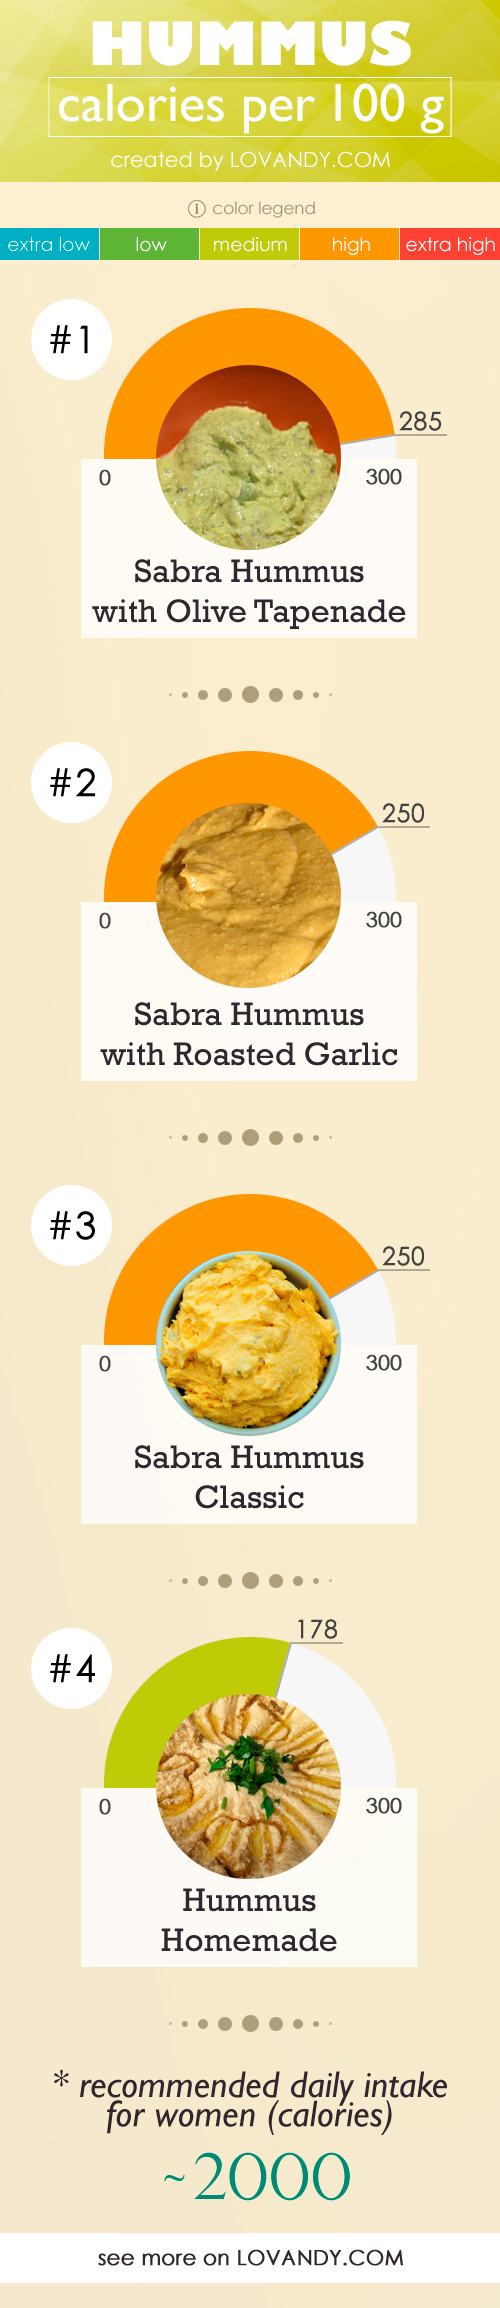 sabra hummus calories